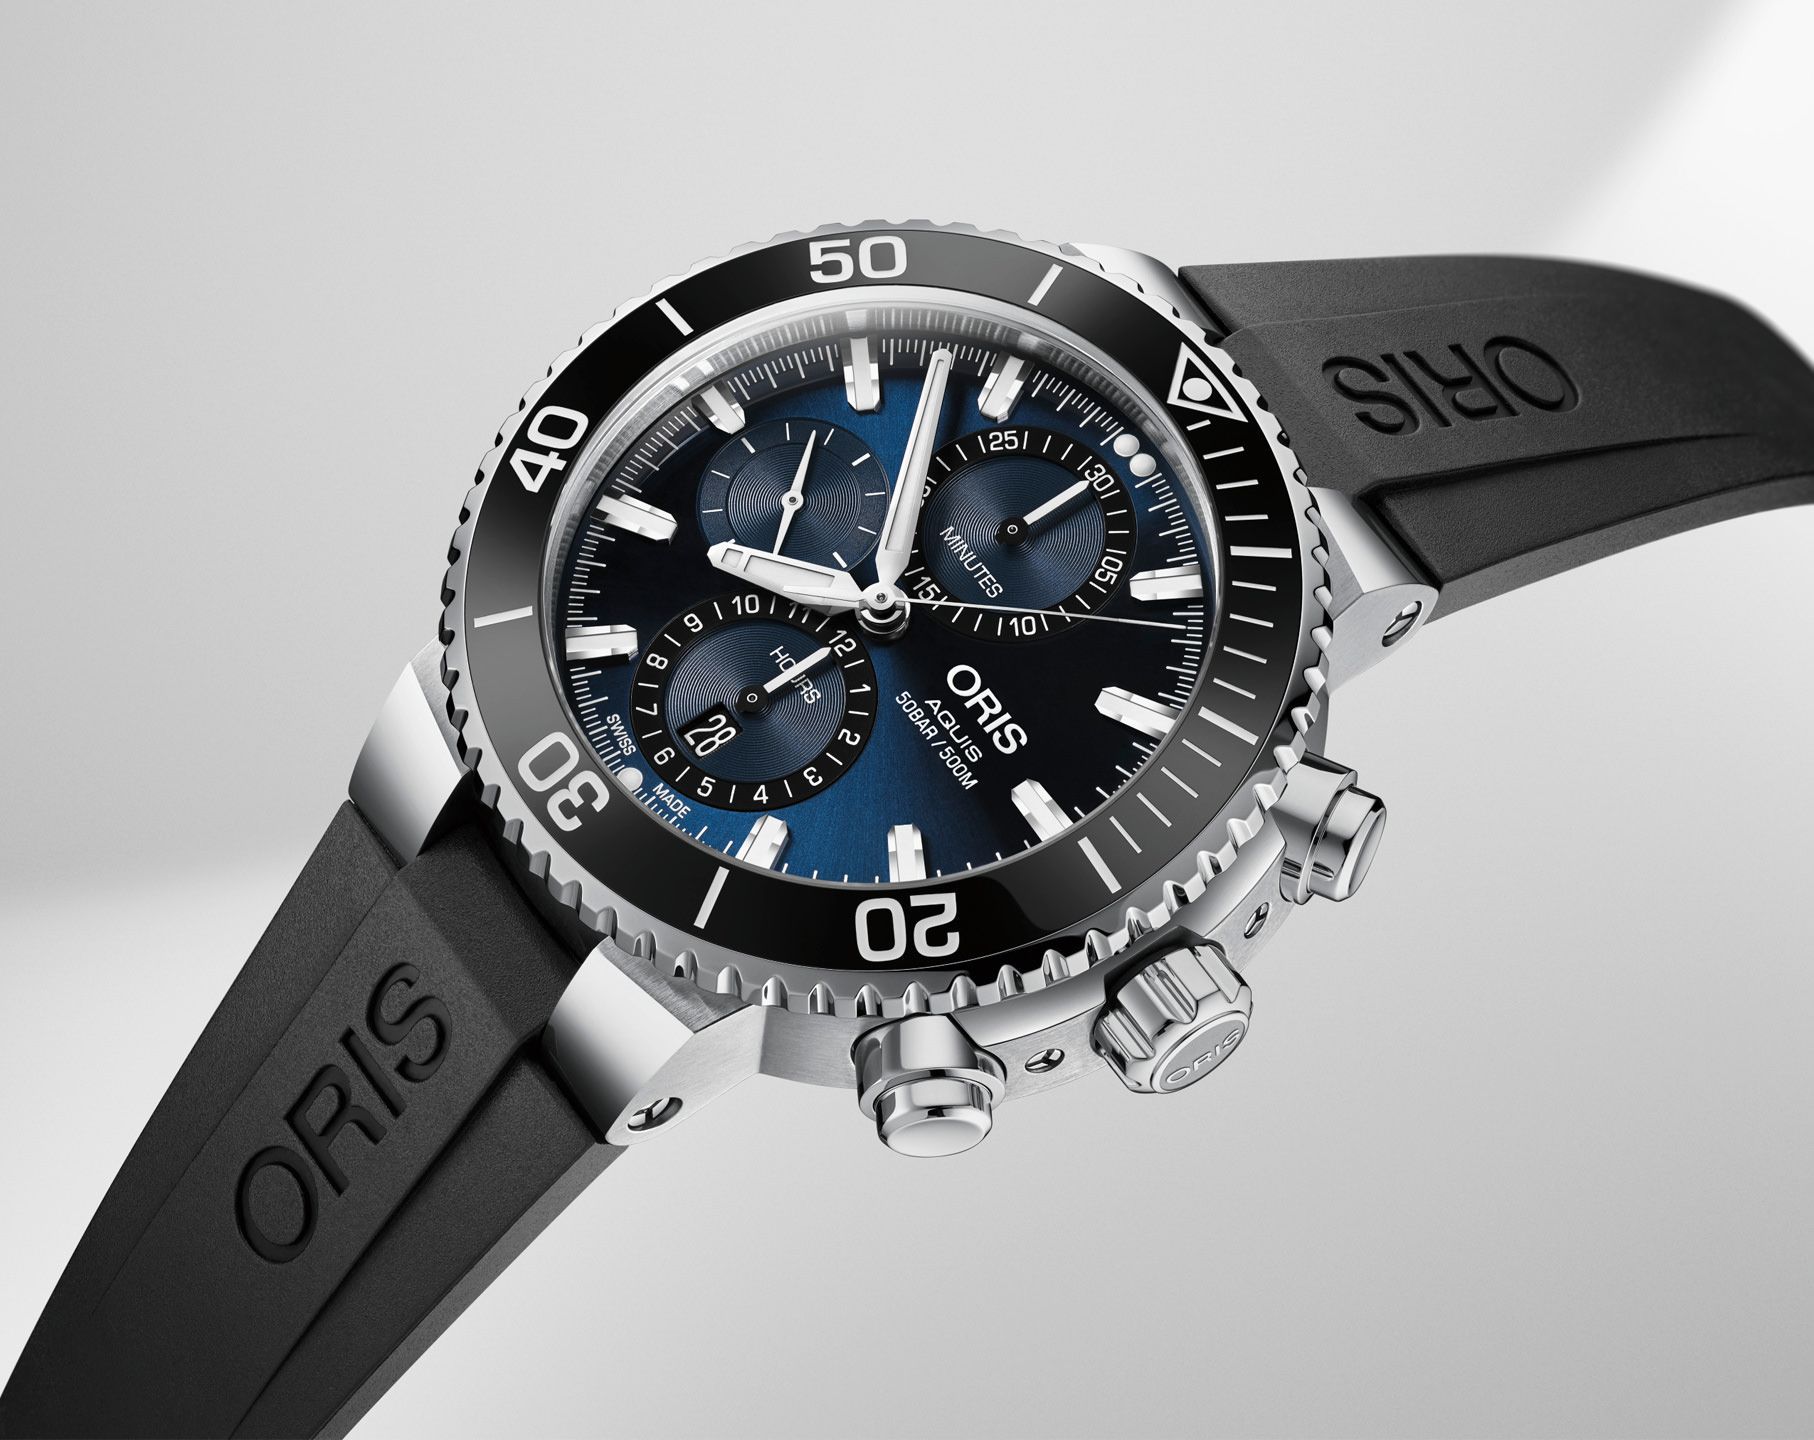 Oris Aquis Chronograph 45.5 mm Watch in Blue Dial For Men - 2